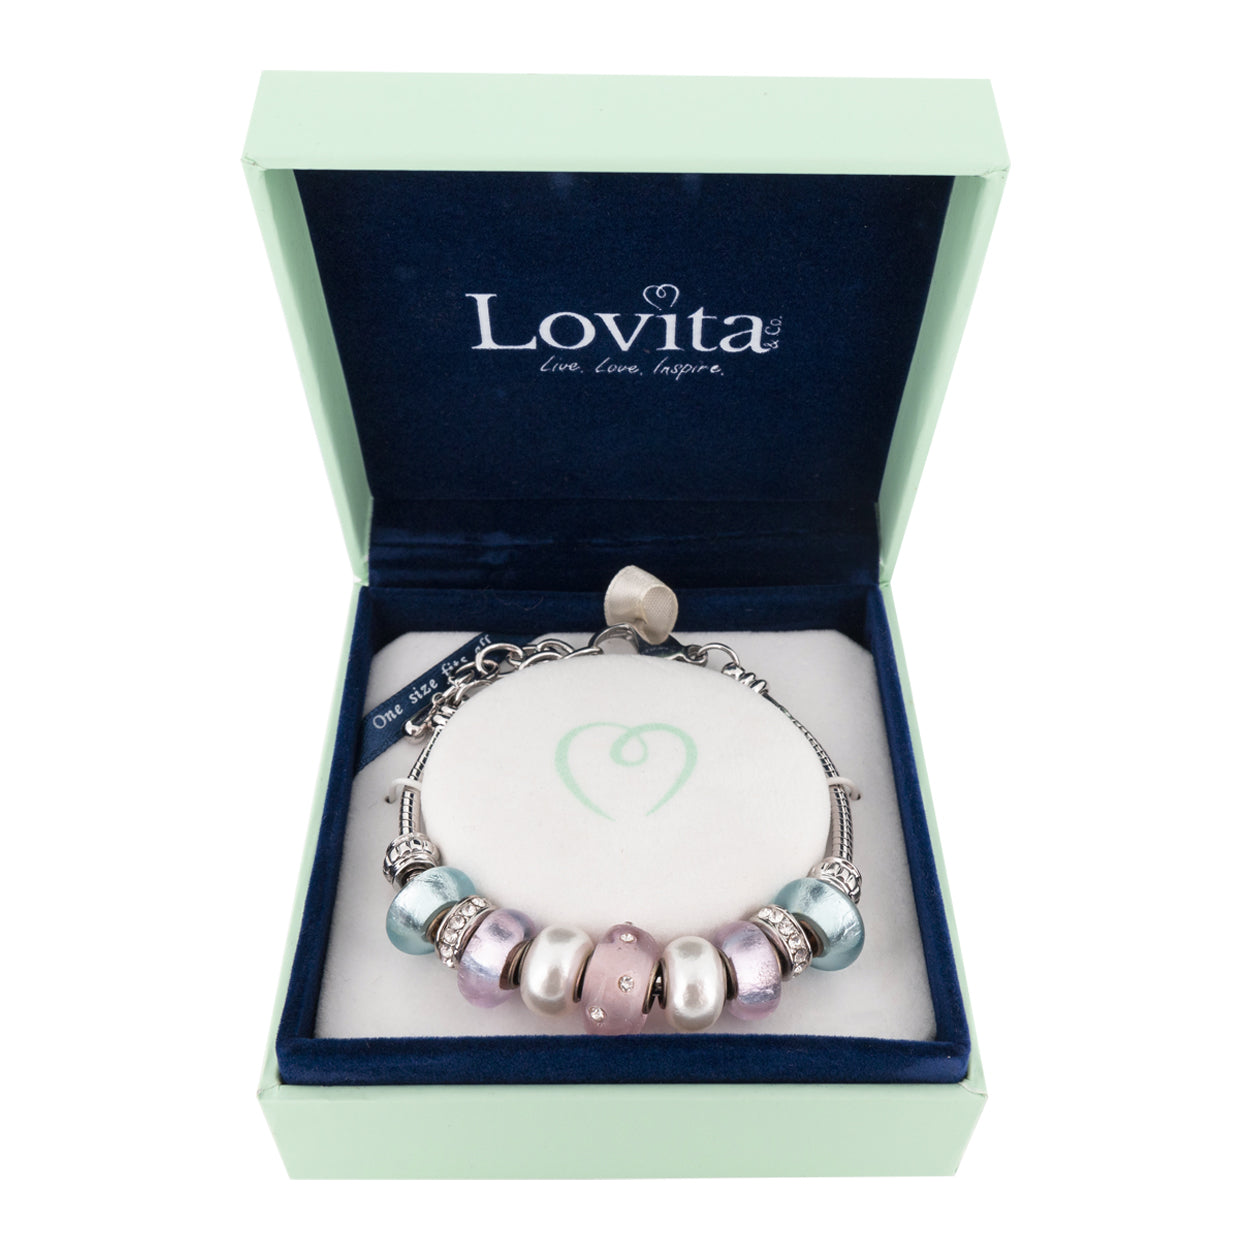 Lovita Charm Bracelet Sky Blue And Pink Charms